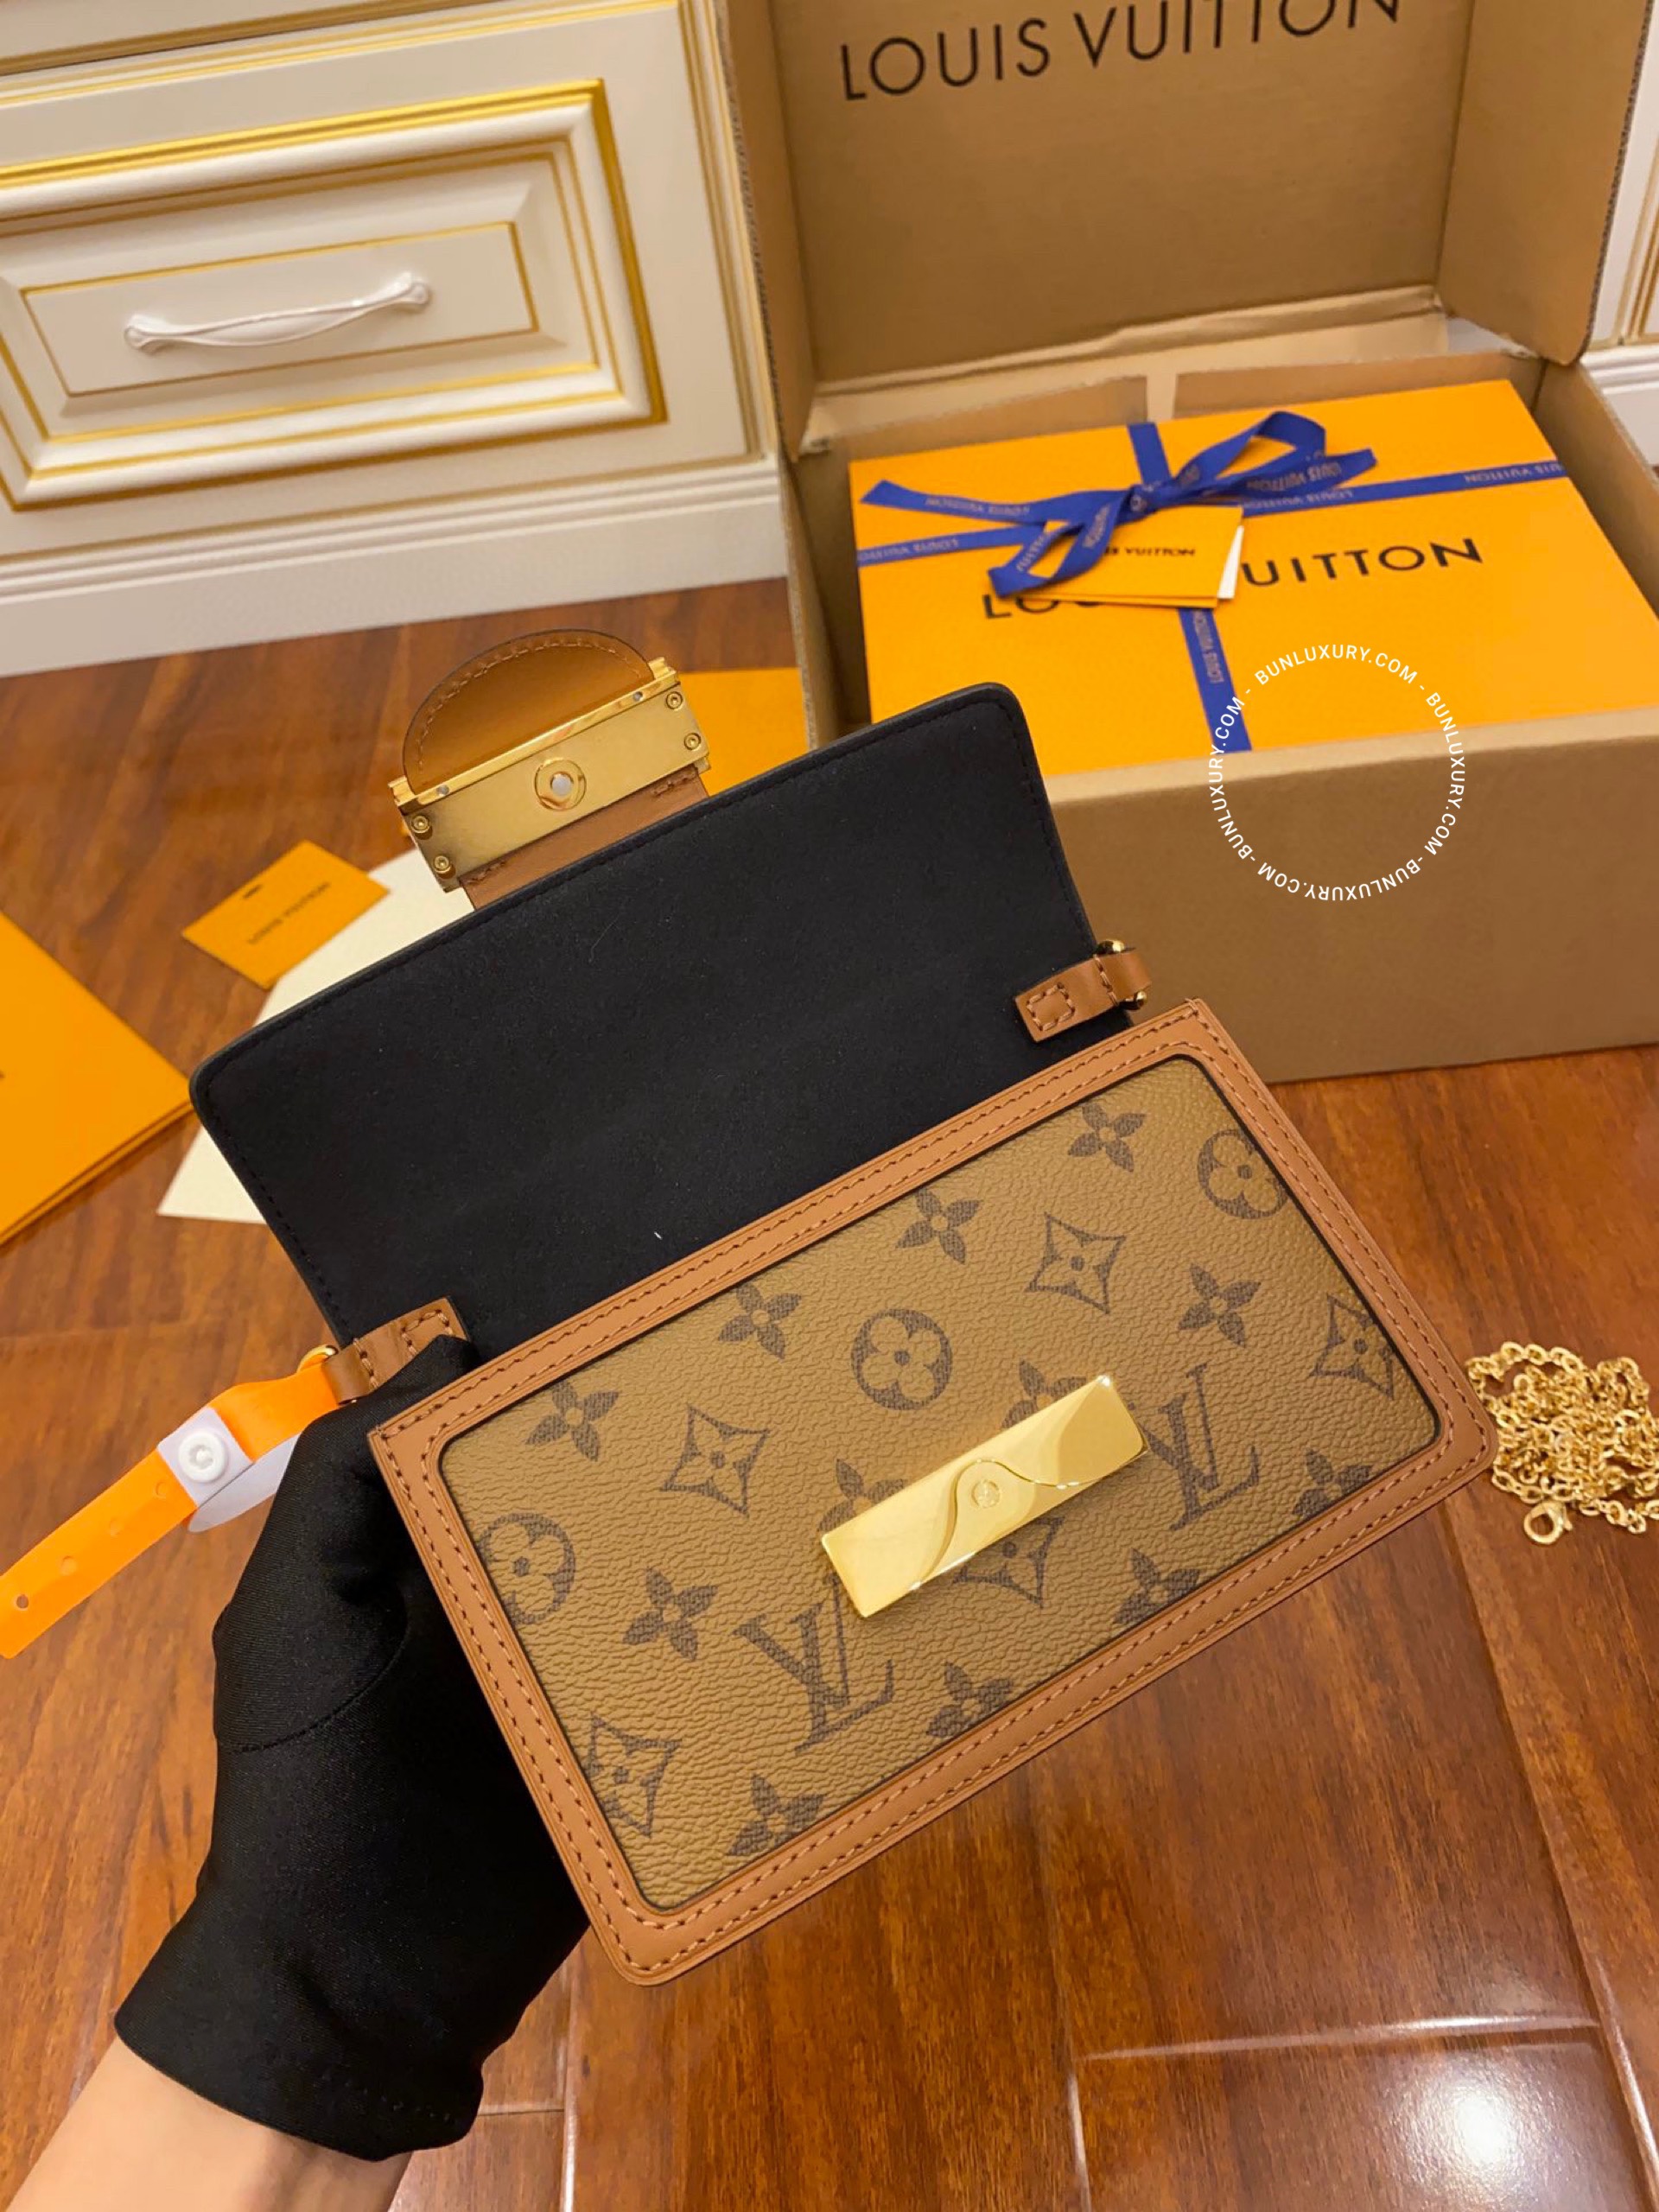 Túi Xách Louis Vuitton Dauphine Chaine Wallet Monogram M68746